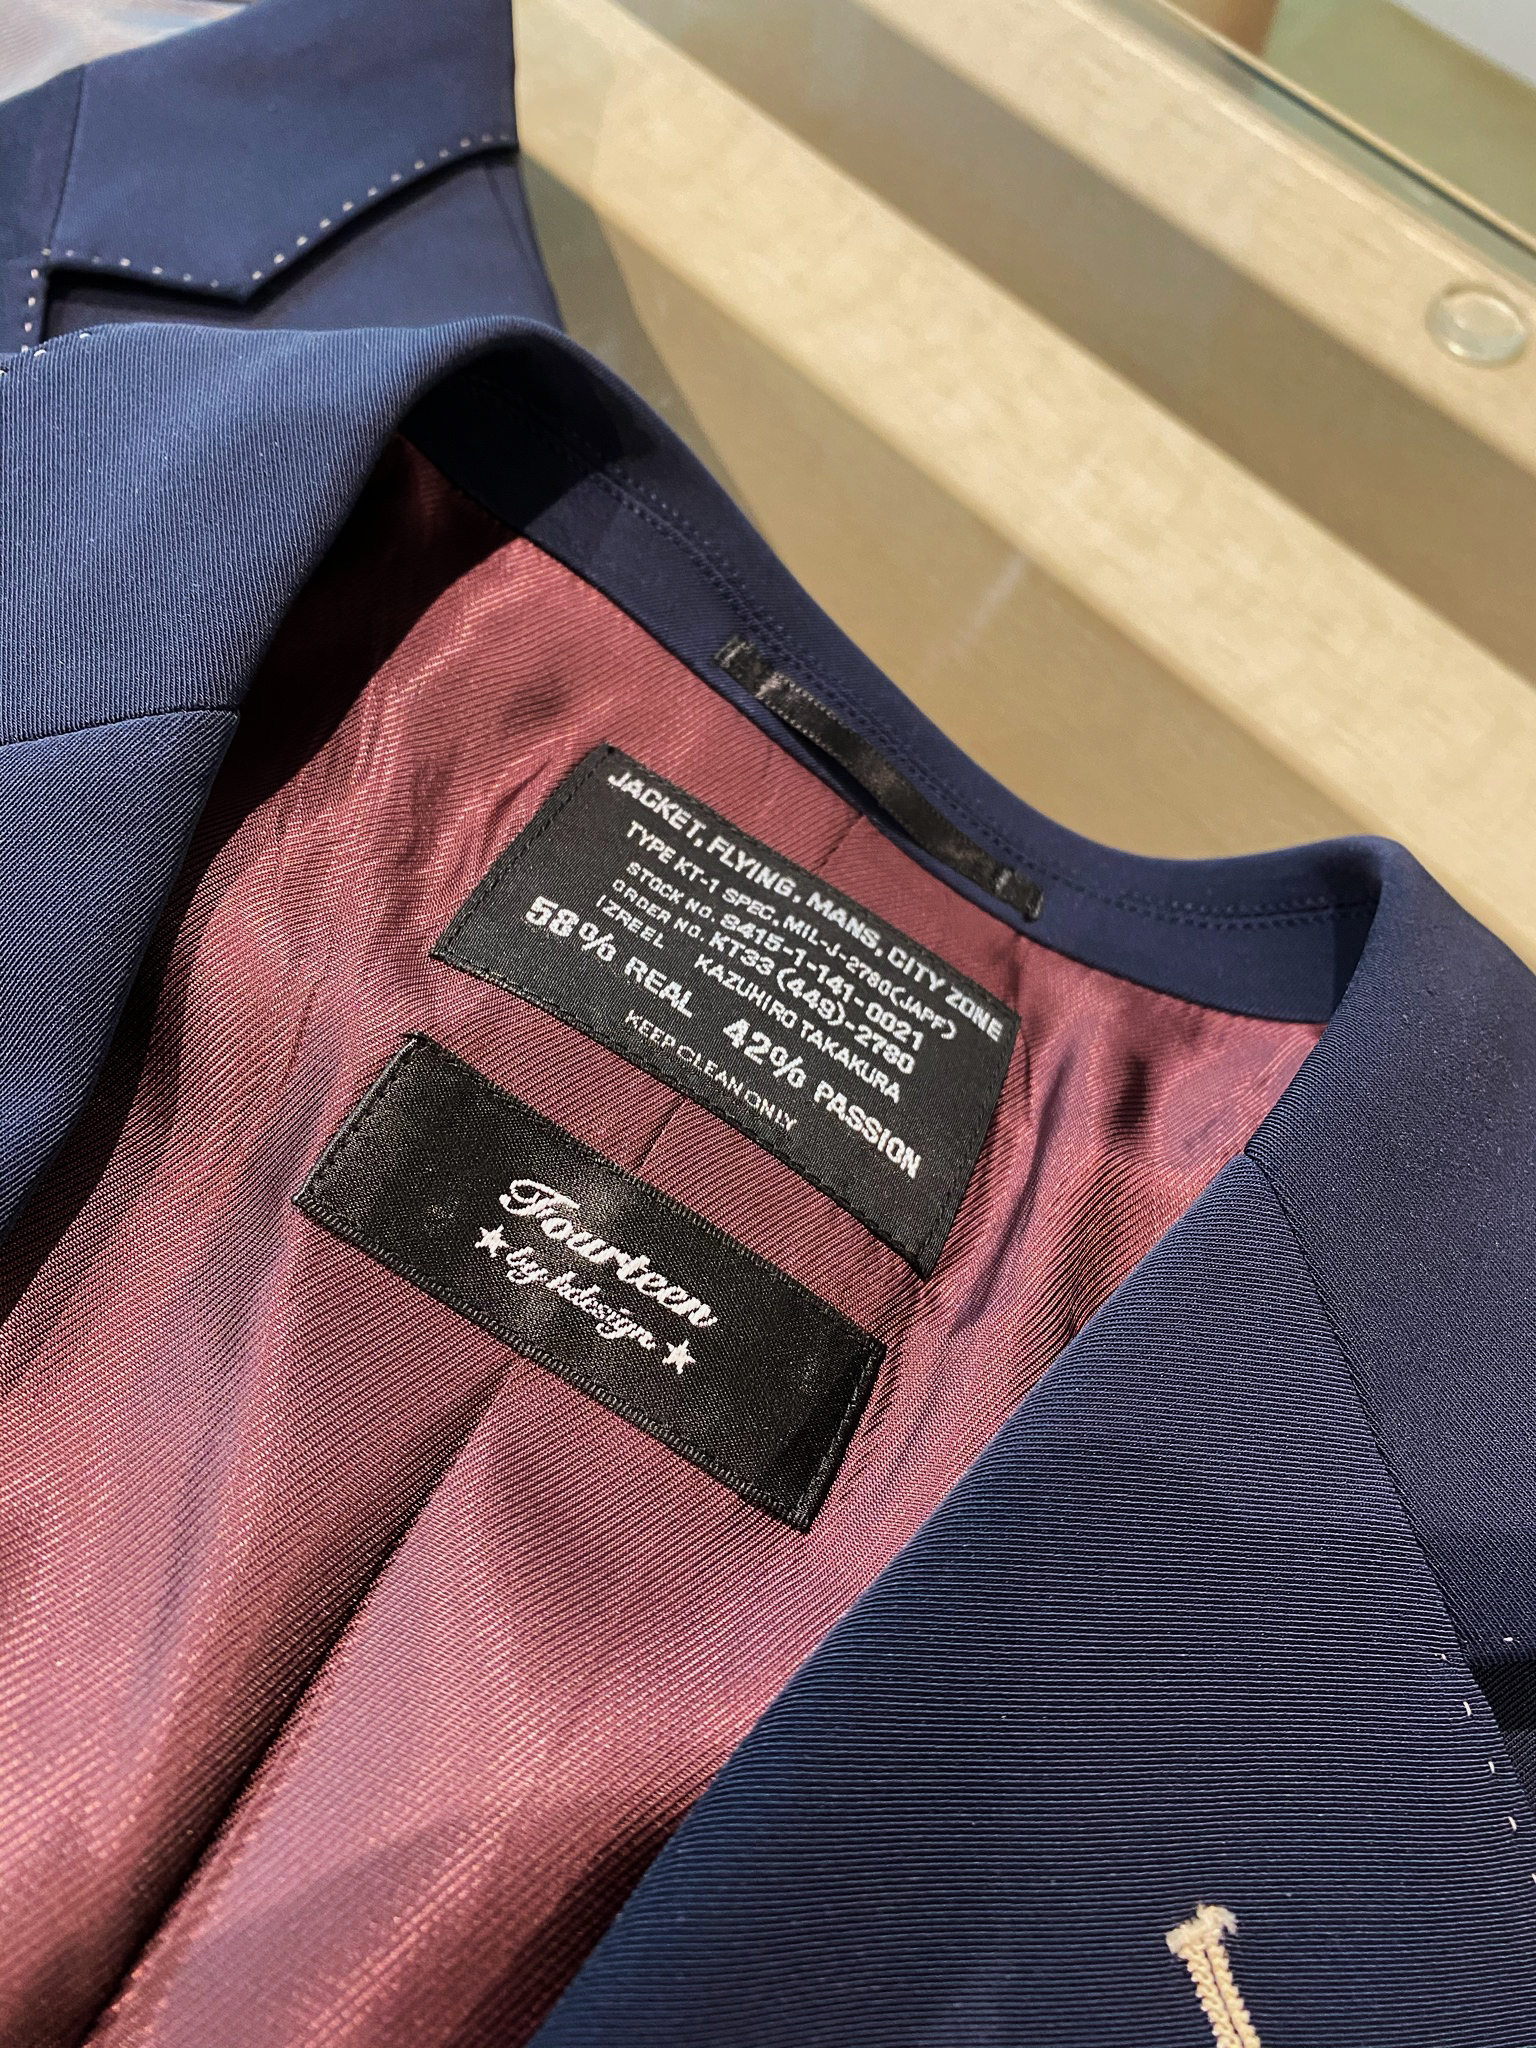 KAZが展開するオーダーメイド衣装ブランドのIZREEL（イズリール）とのコラボレーションブランドとして、ダブルネームタグとなっている。